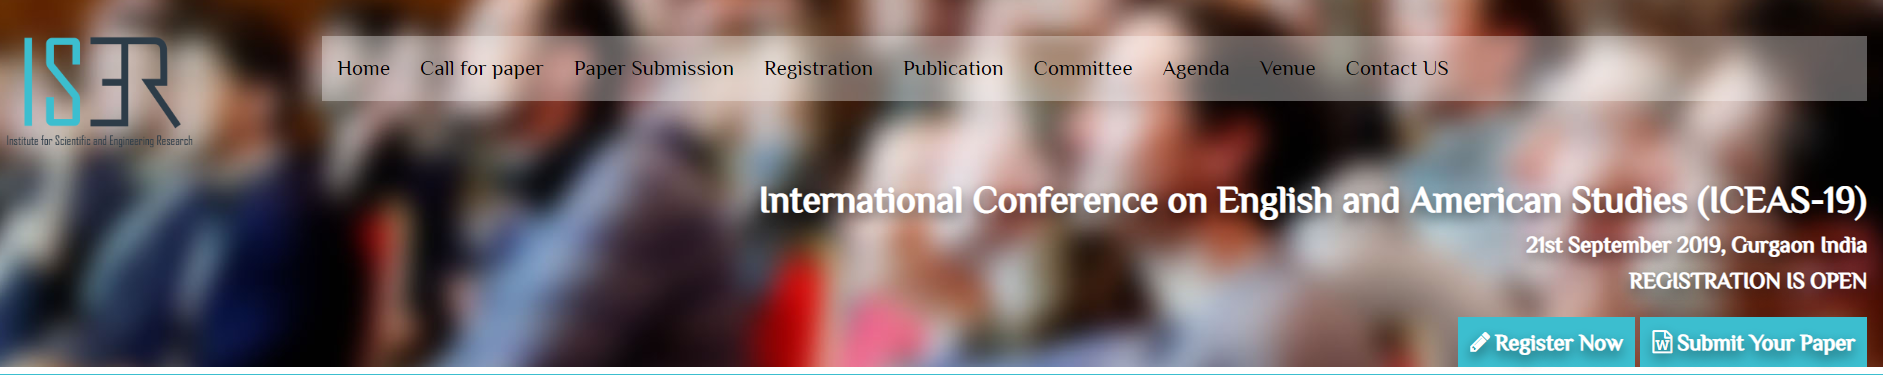 International Conference on English and American Studies (ICEAS-19), Gurgaon, Haryana, India